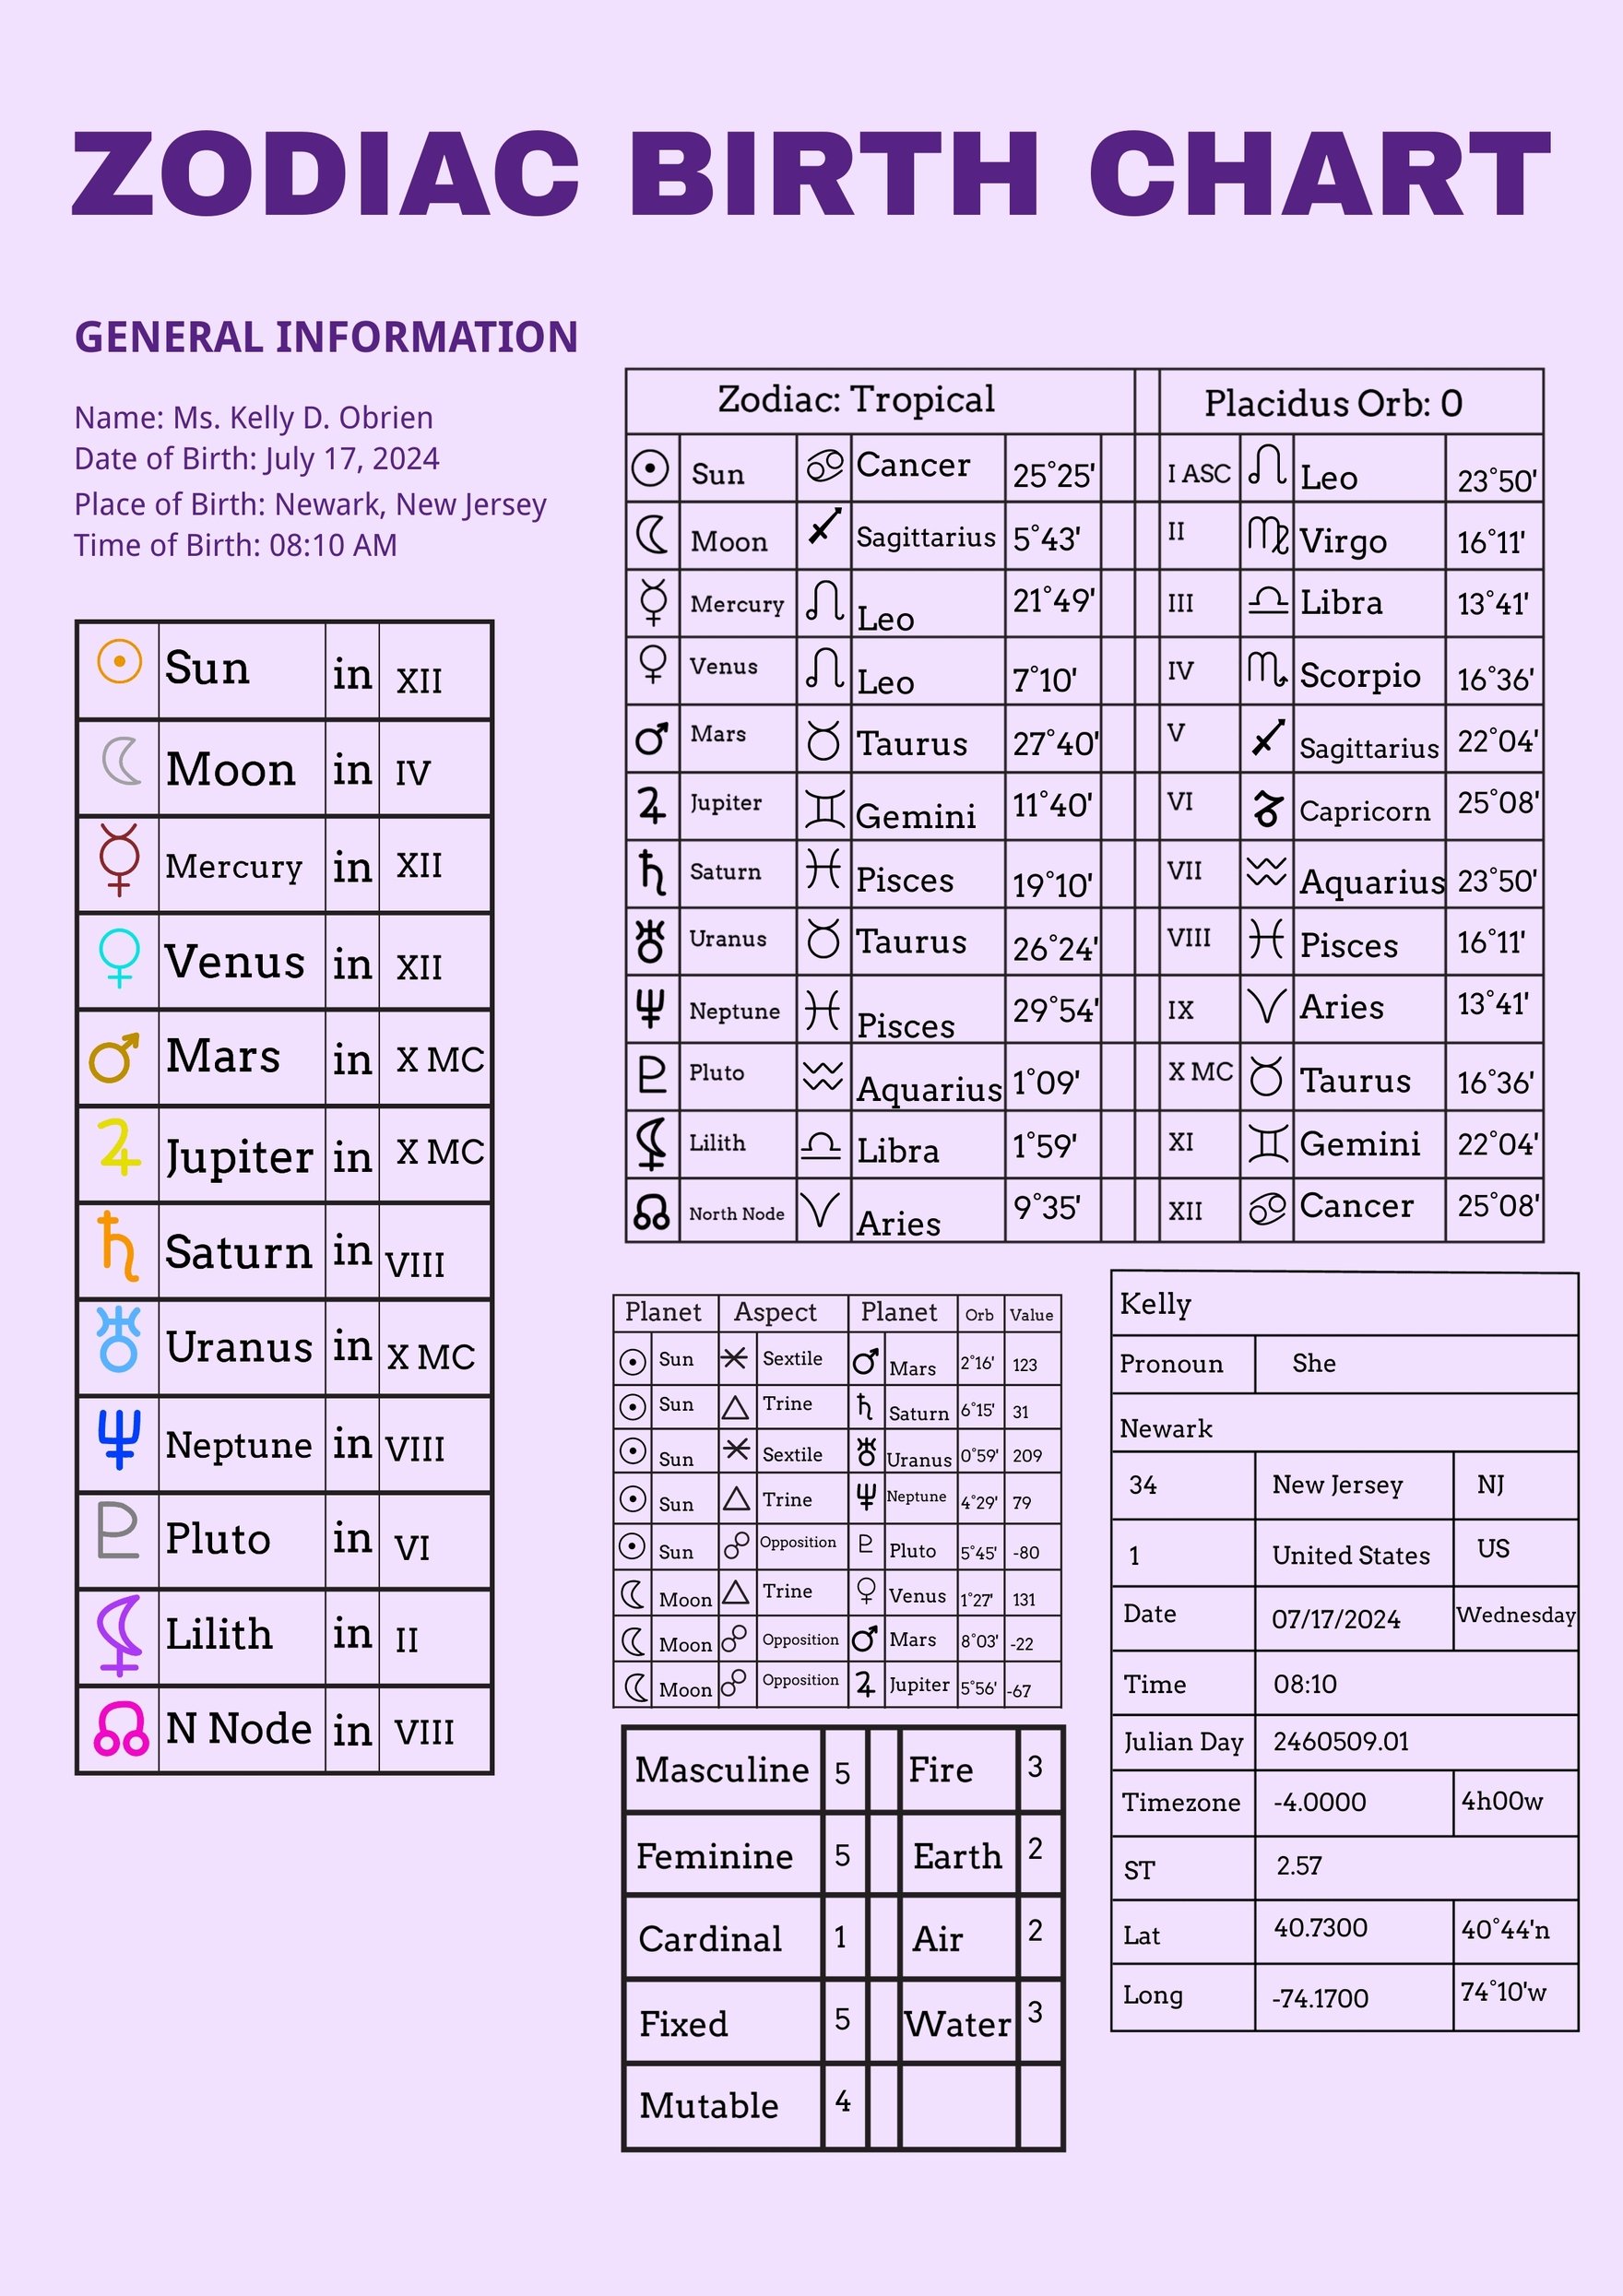 Zodiac Birth Chart Template in PDF, Illustrator